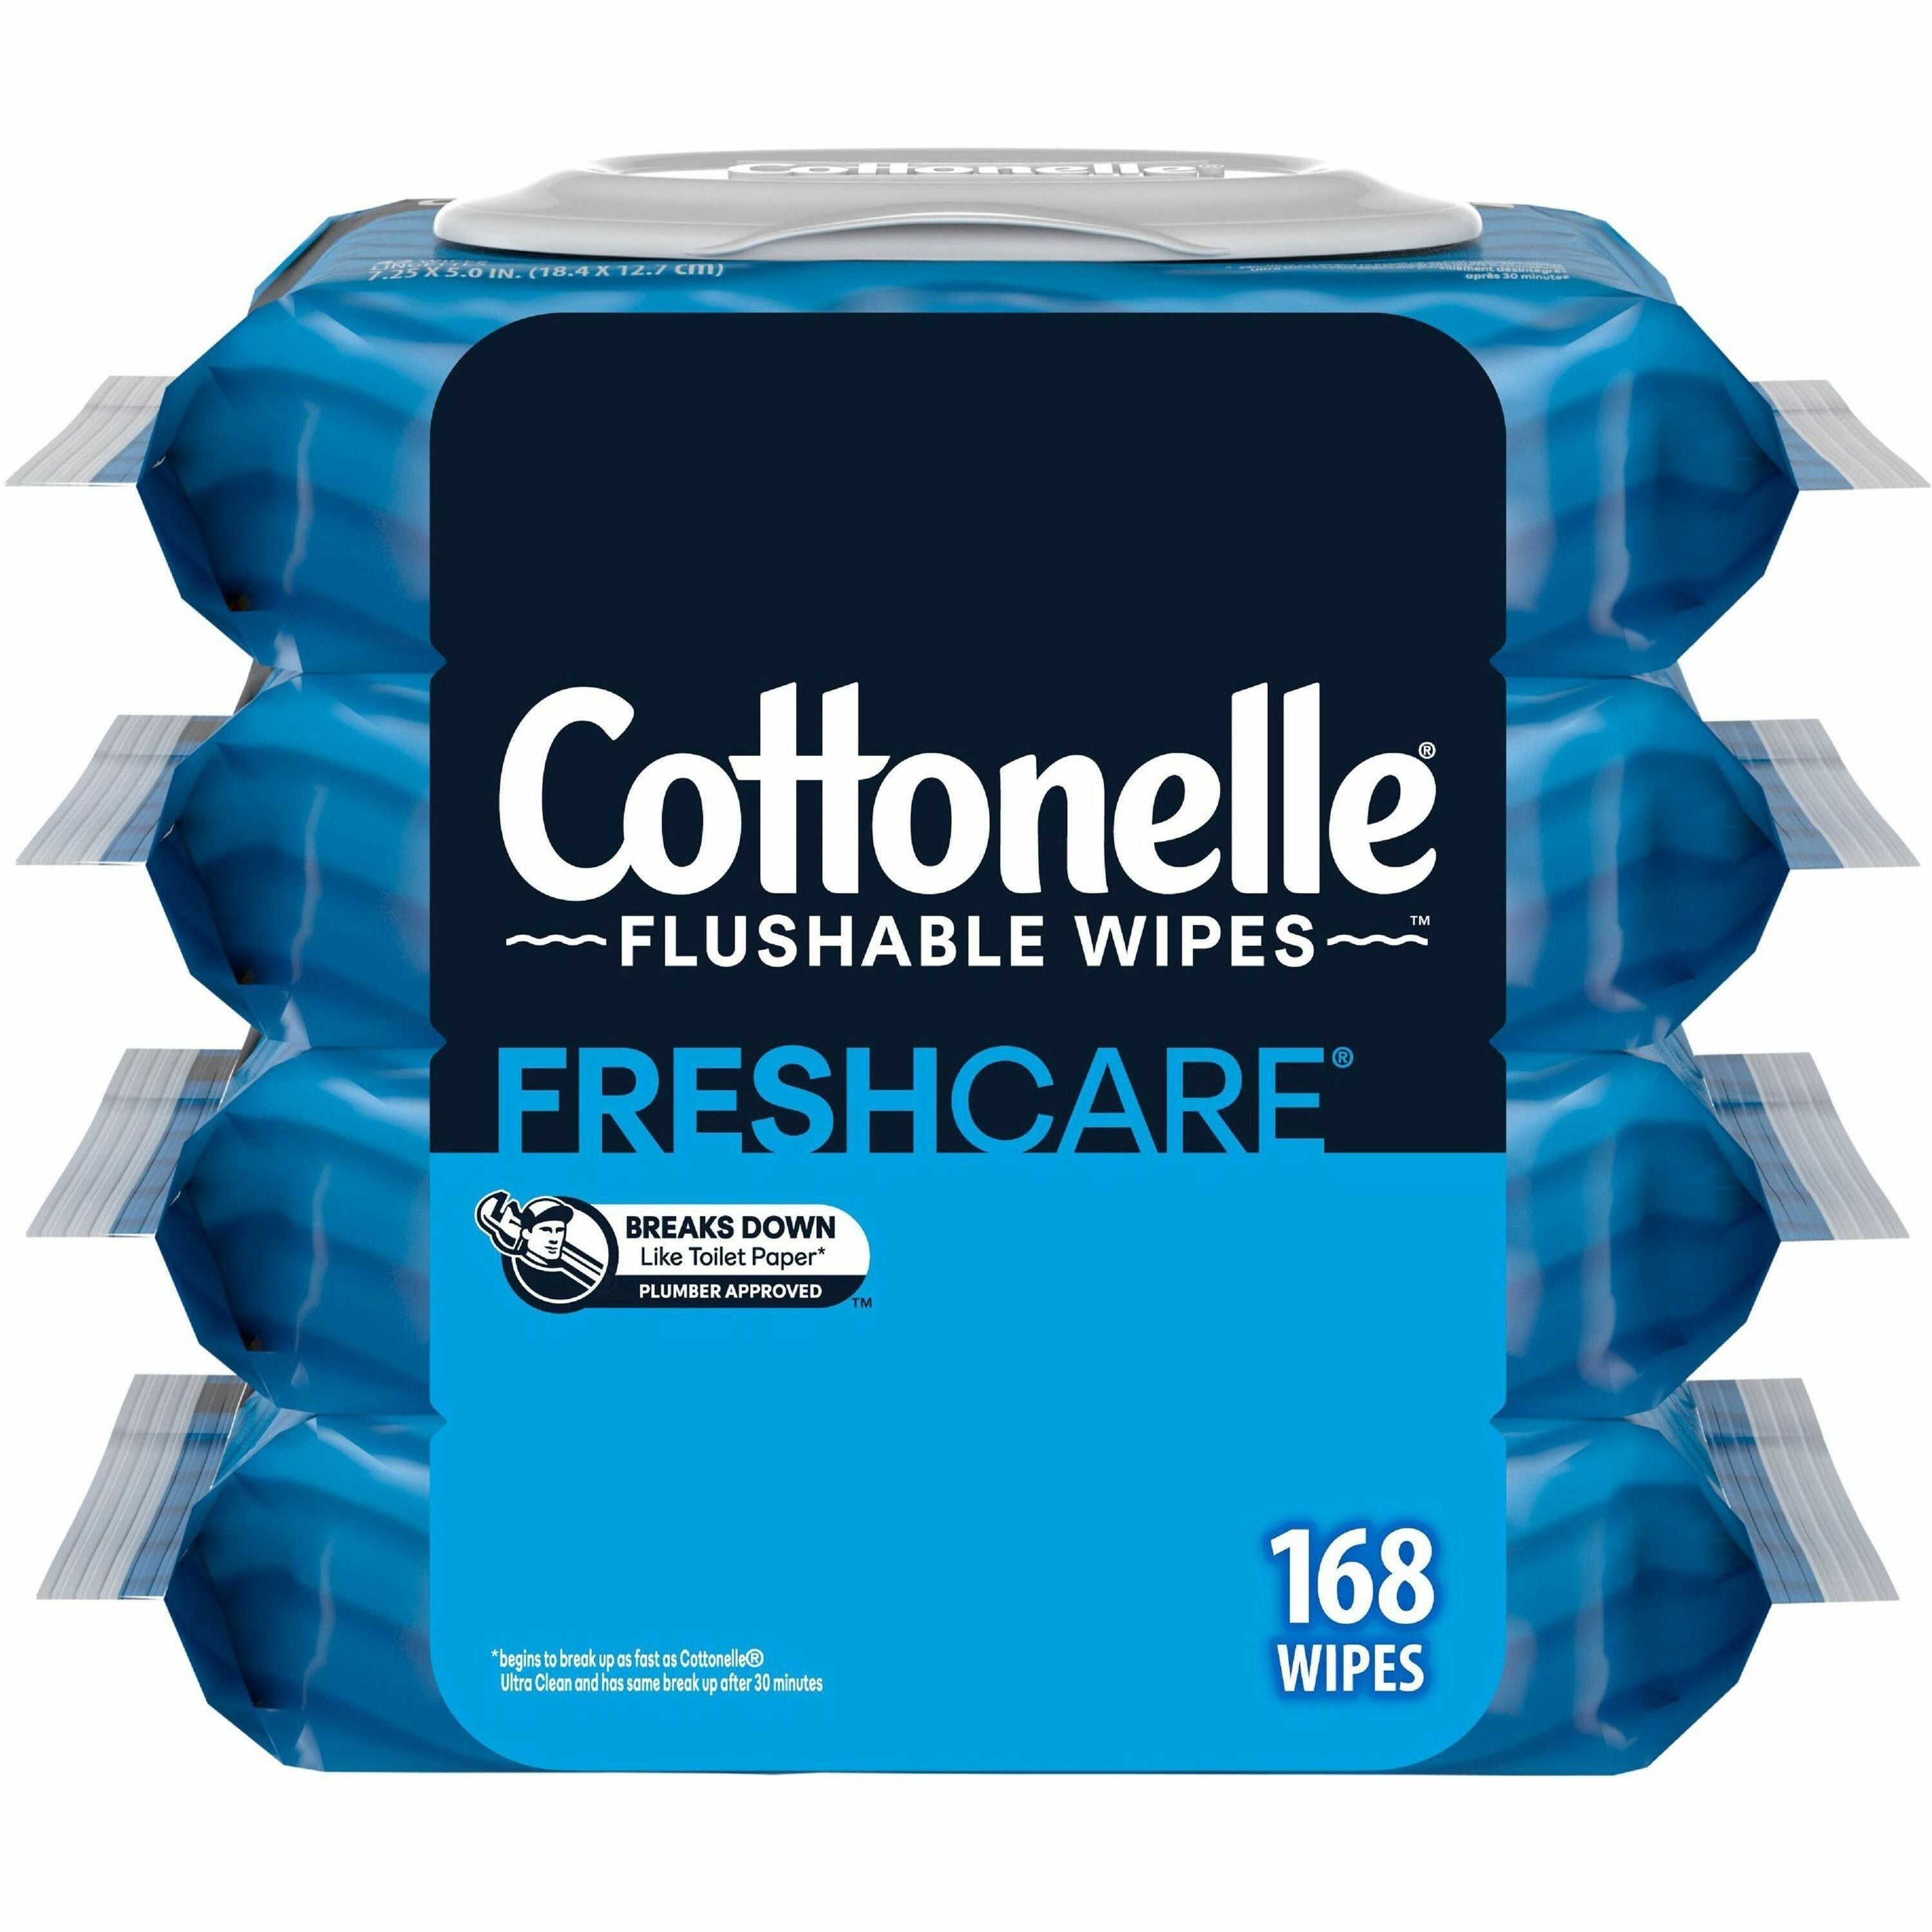 cottonelle-flushable-wipes-725-white-fiber-flushable-anti-bacterial-sewer-safe-septic-safe-biodegradable-alcohol-free-for-toilet-bathroom-4-per-carton-1-each_kcc54495 - 1